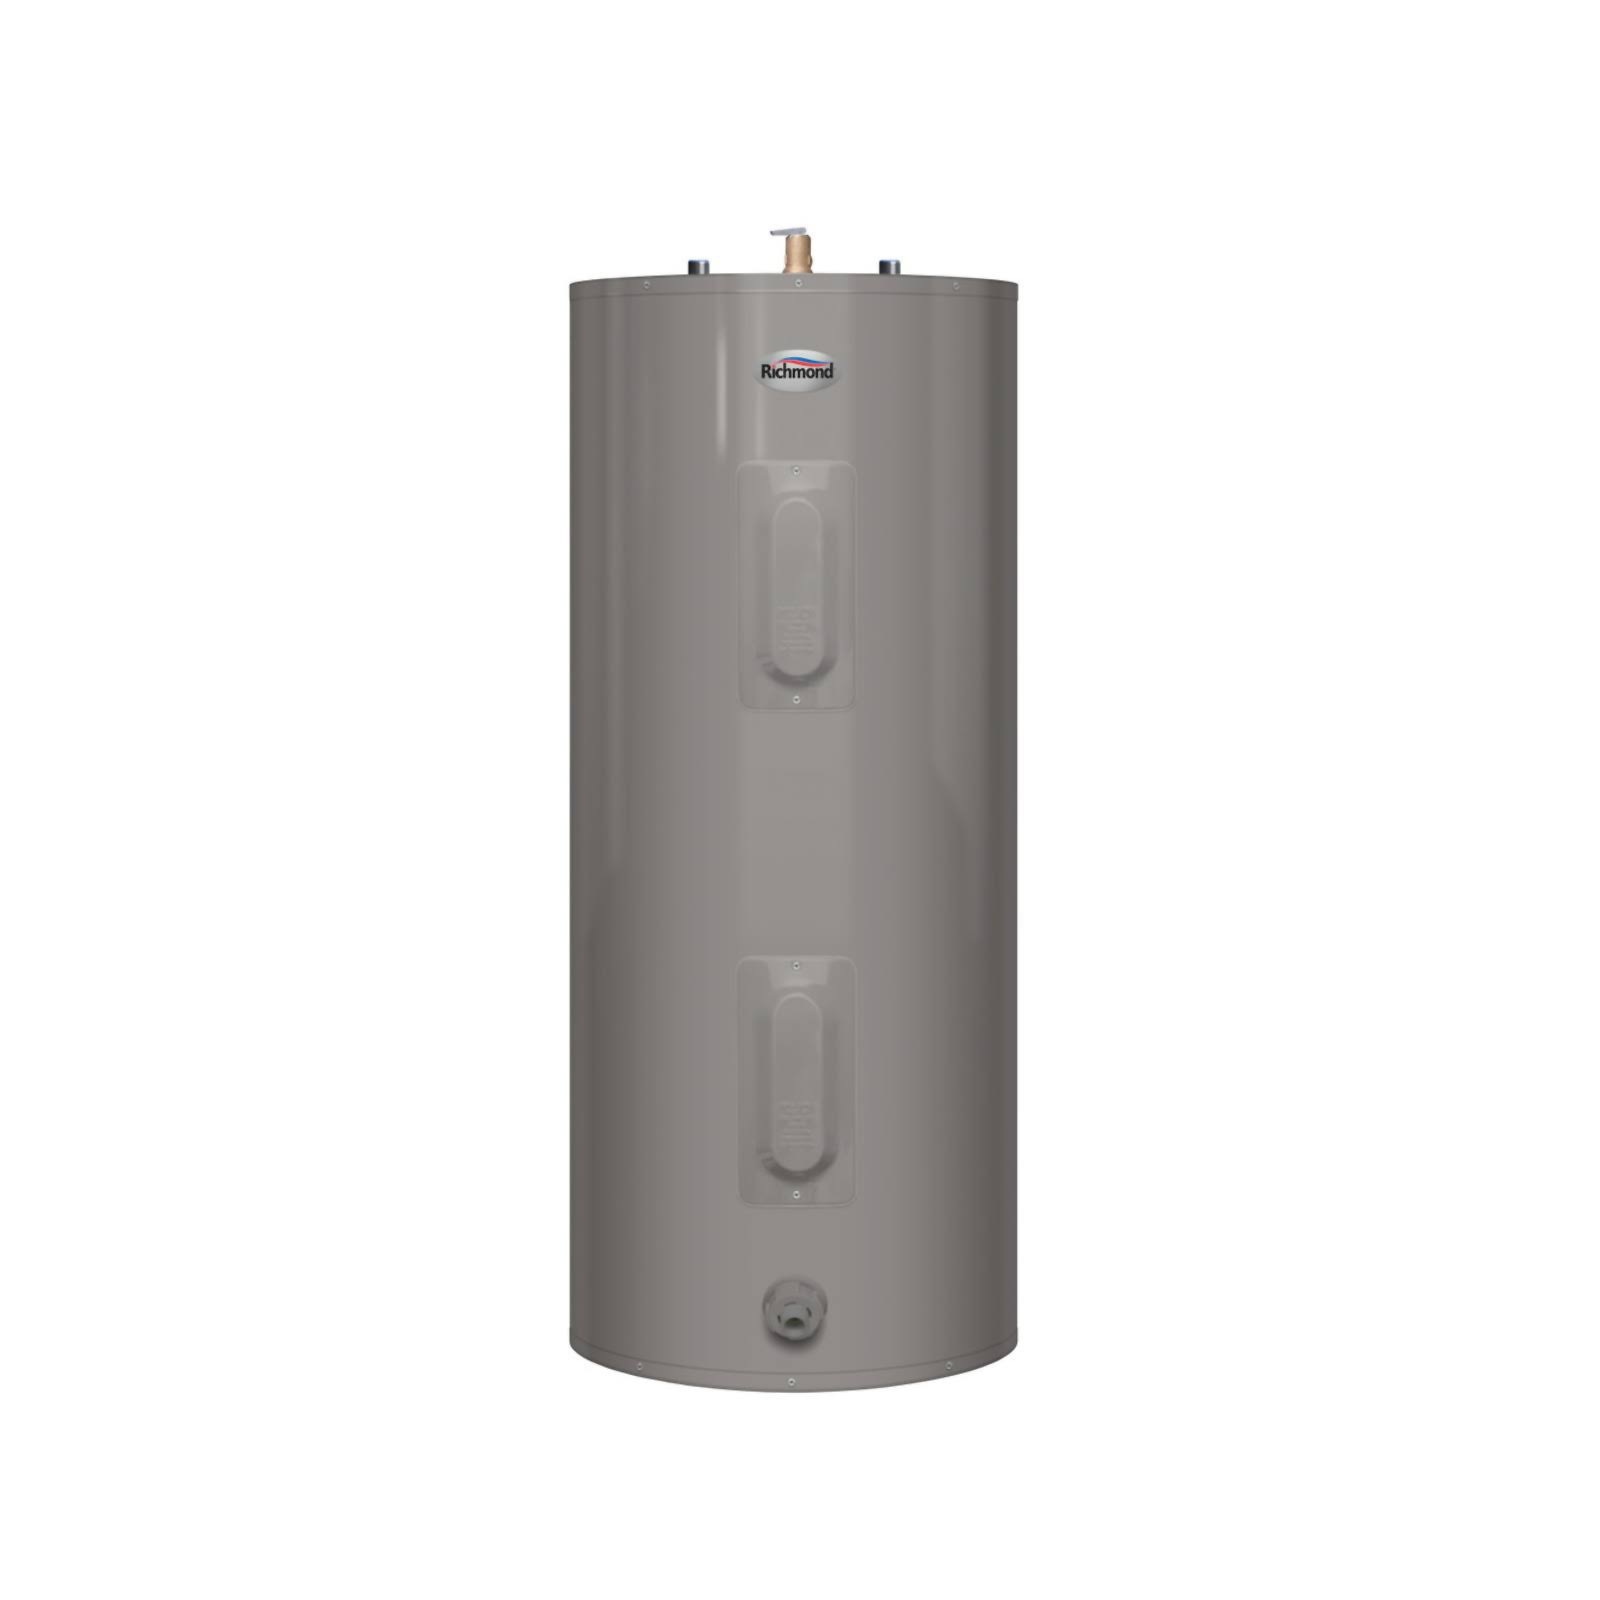 Rheem Richmond Water Heater - 50gal